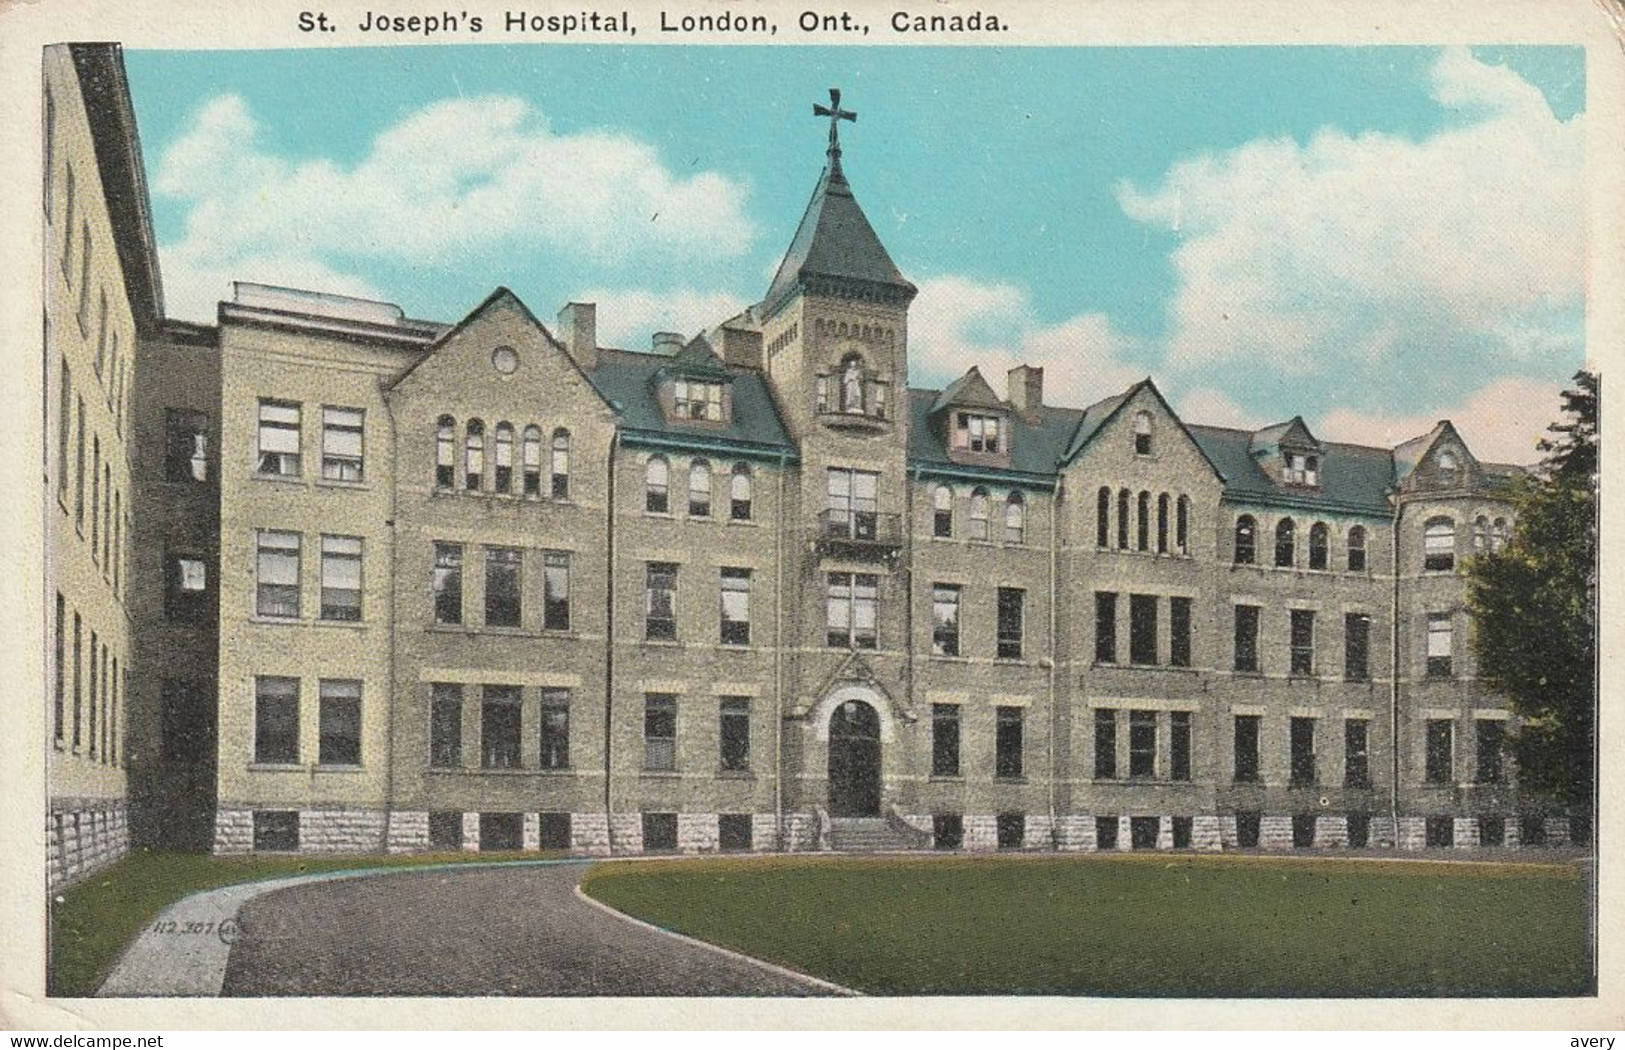 St. Joseph's Hospital, London, Ontario - Londen